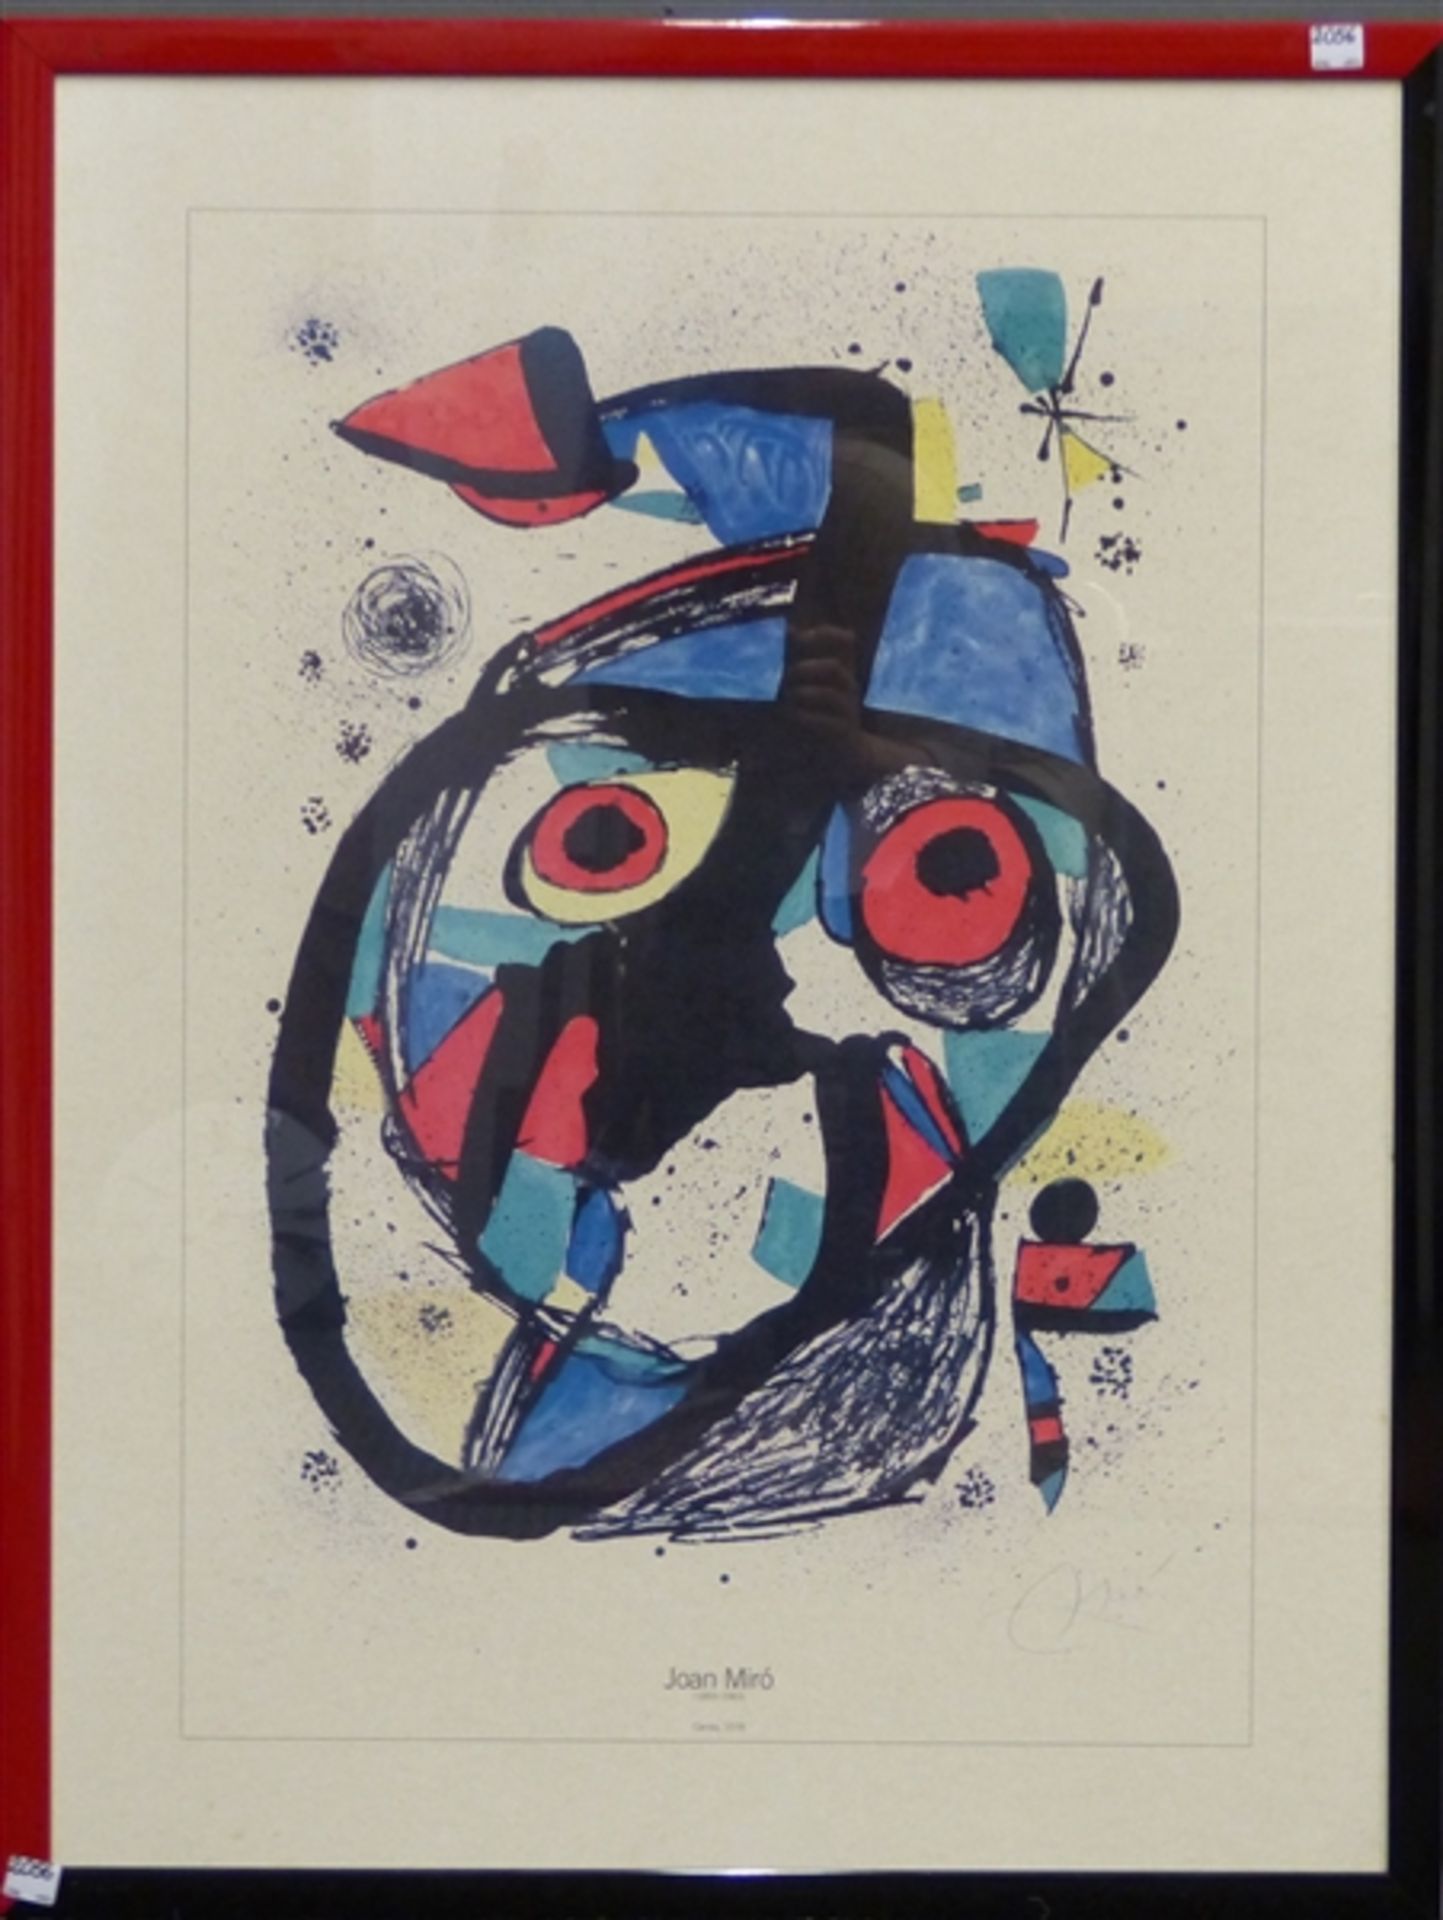 Druckgraphik Joan Miro (1893 - 1983), "Carota" - 1978, rechts unten bezeichnet, 67 x 47 cm, im